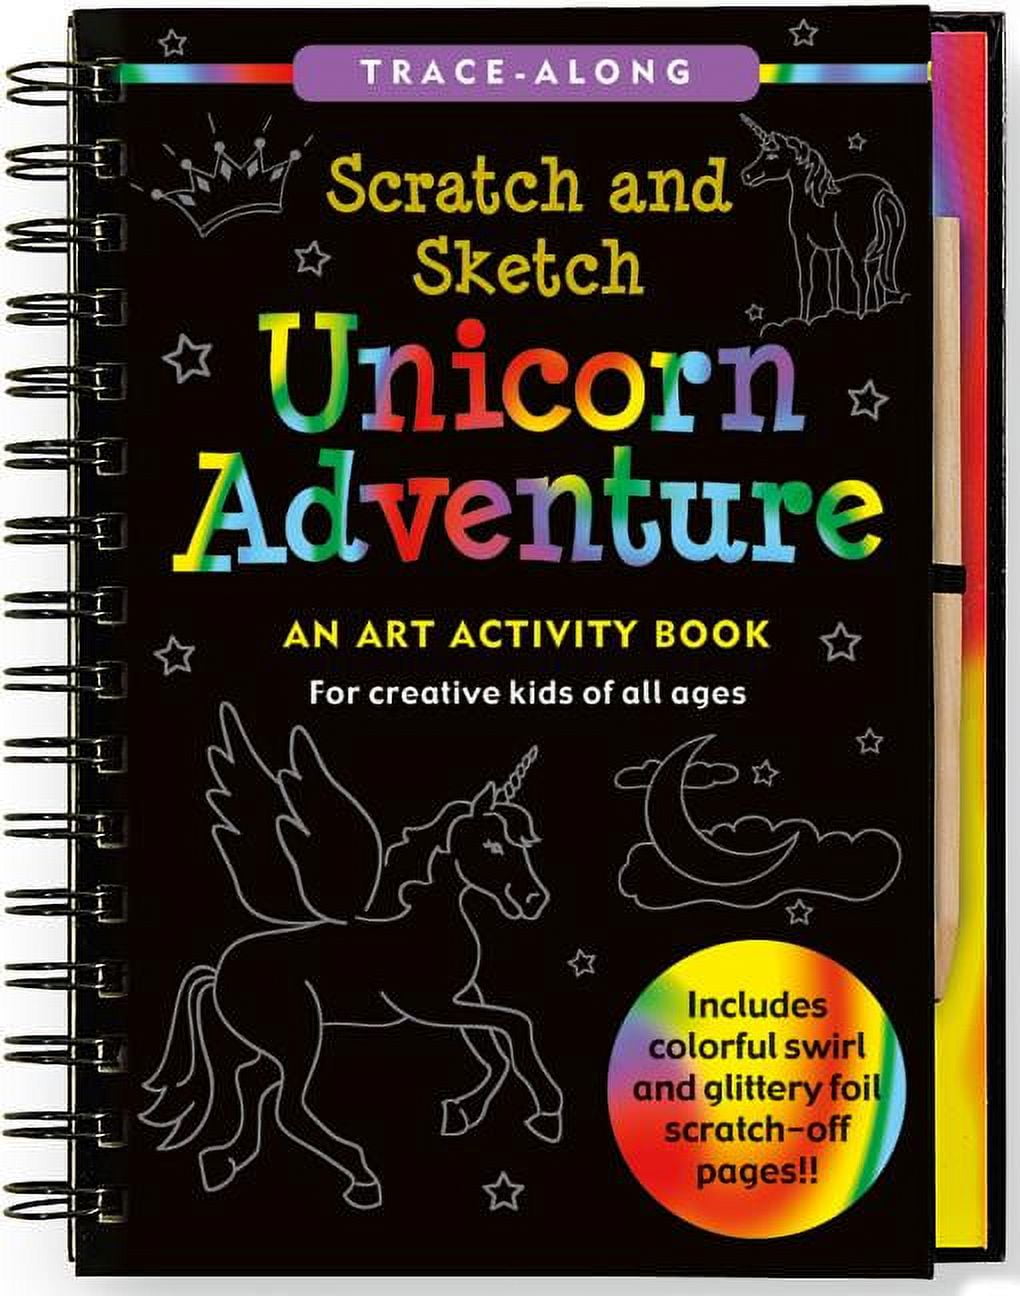 The original scratch-off book of fun activities for kids